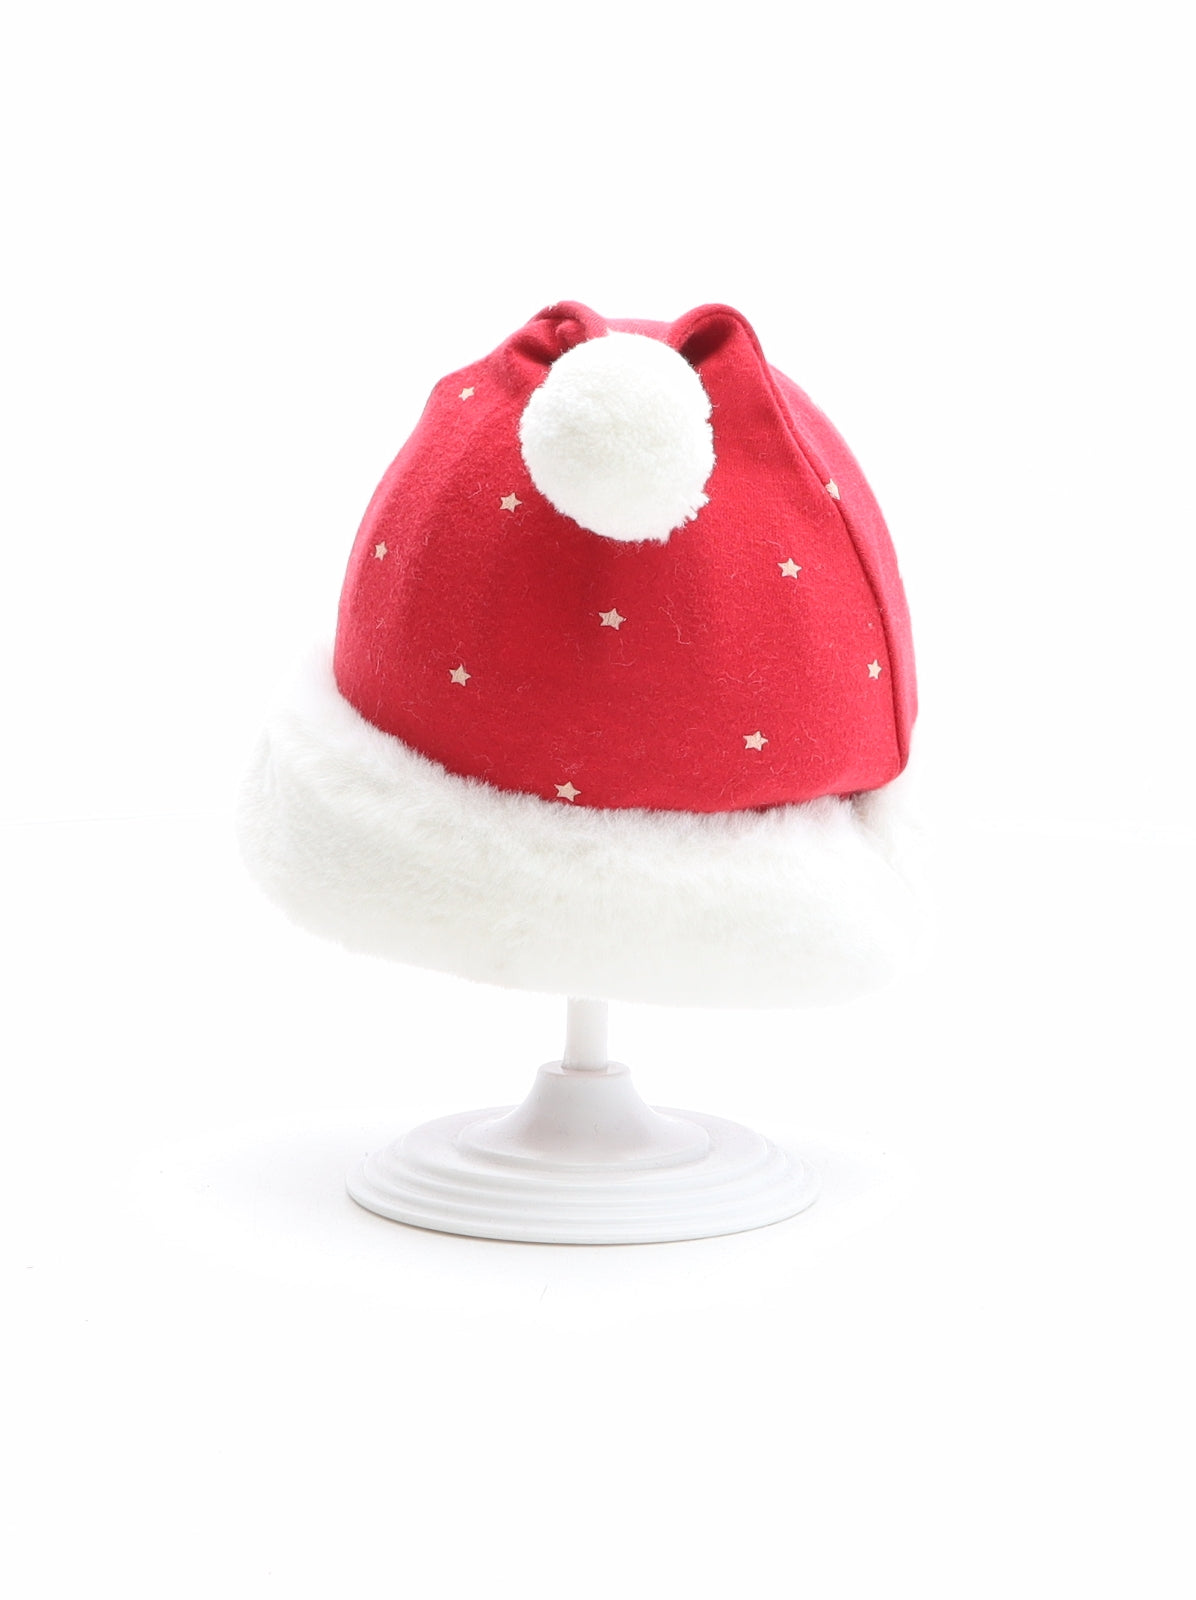 mamas & papas Boys Red Geometric 100% Cotton Bobble Hat One Size - Size 0-3 months, Star Pattern, Santa Hat